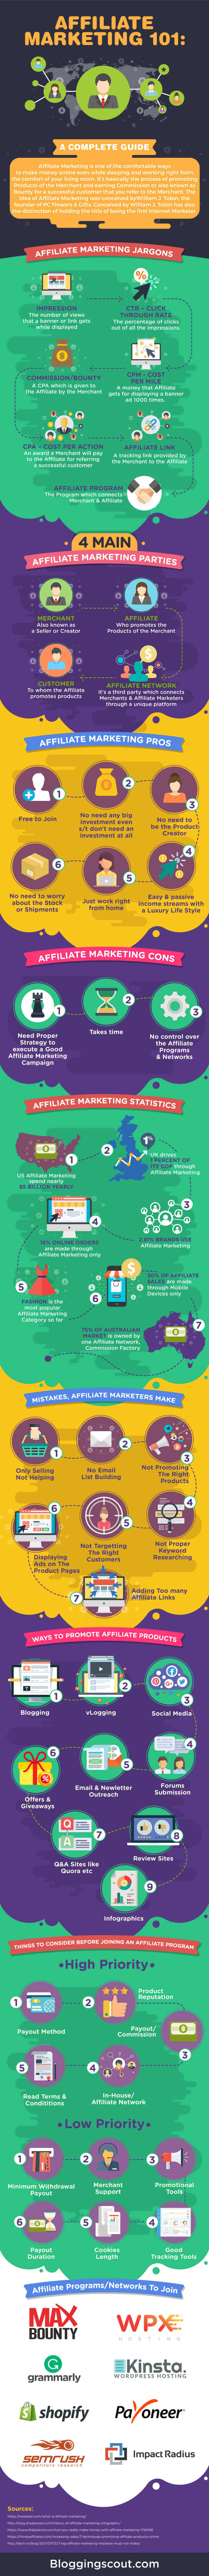 affiliate marketing infographic